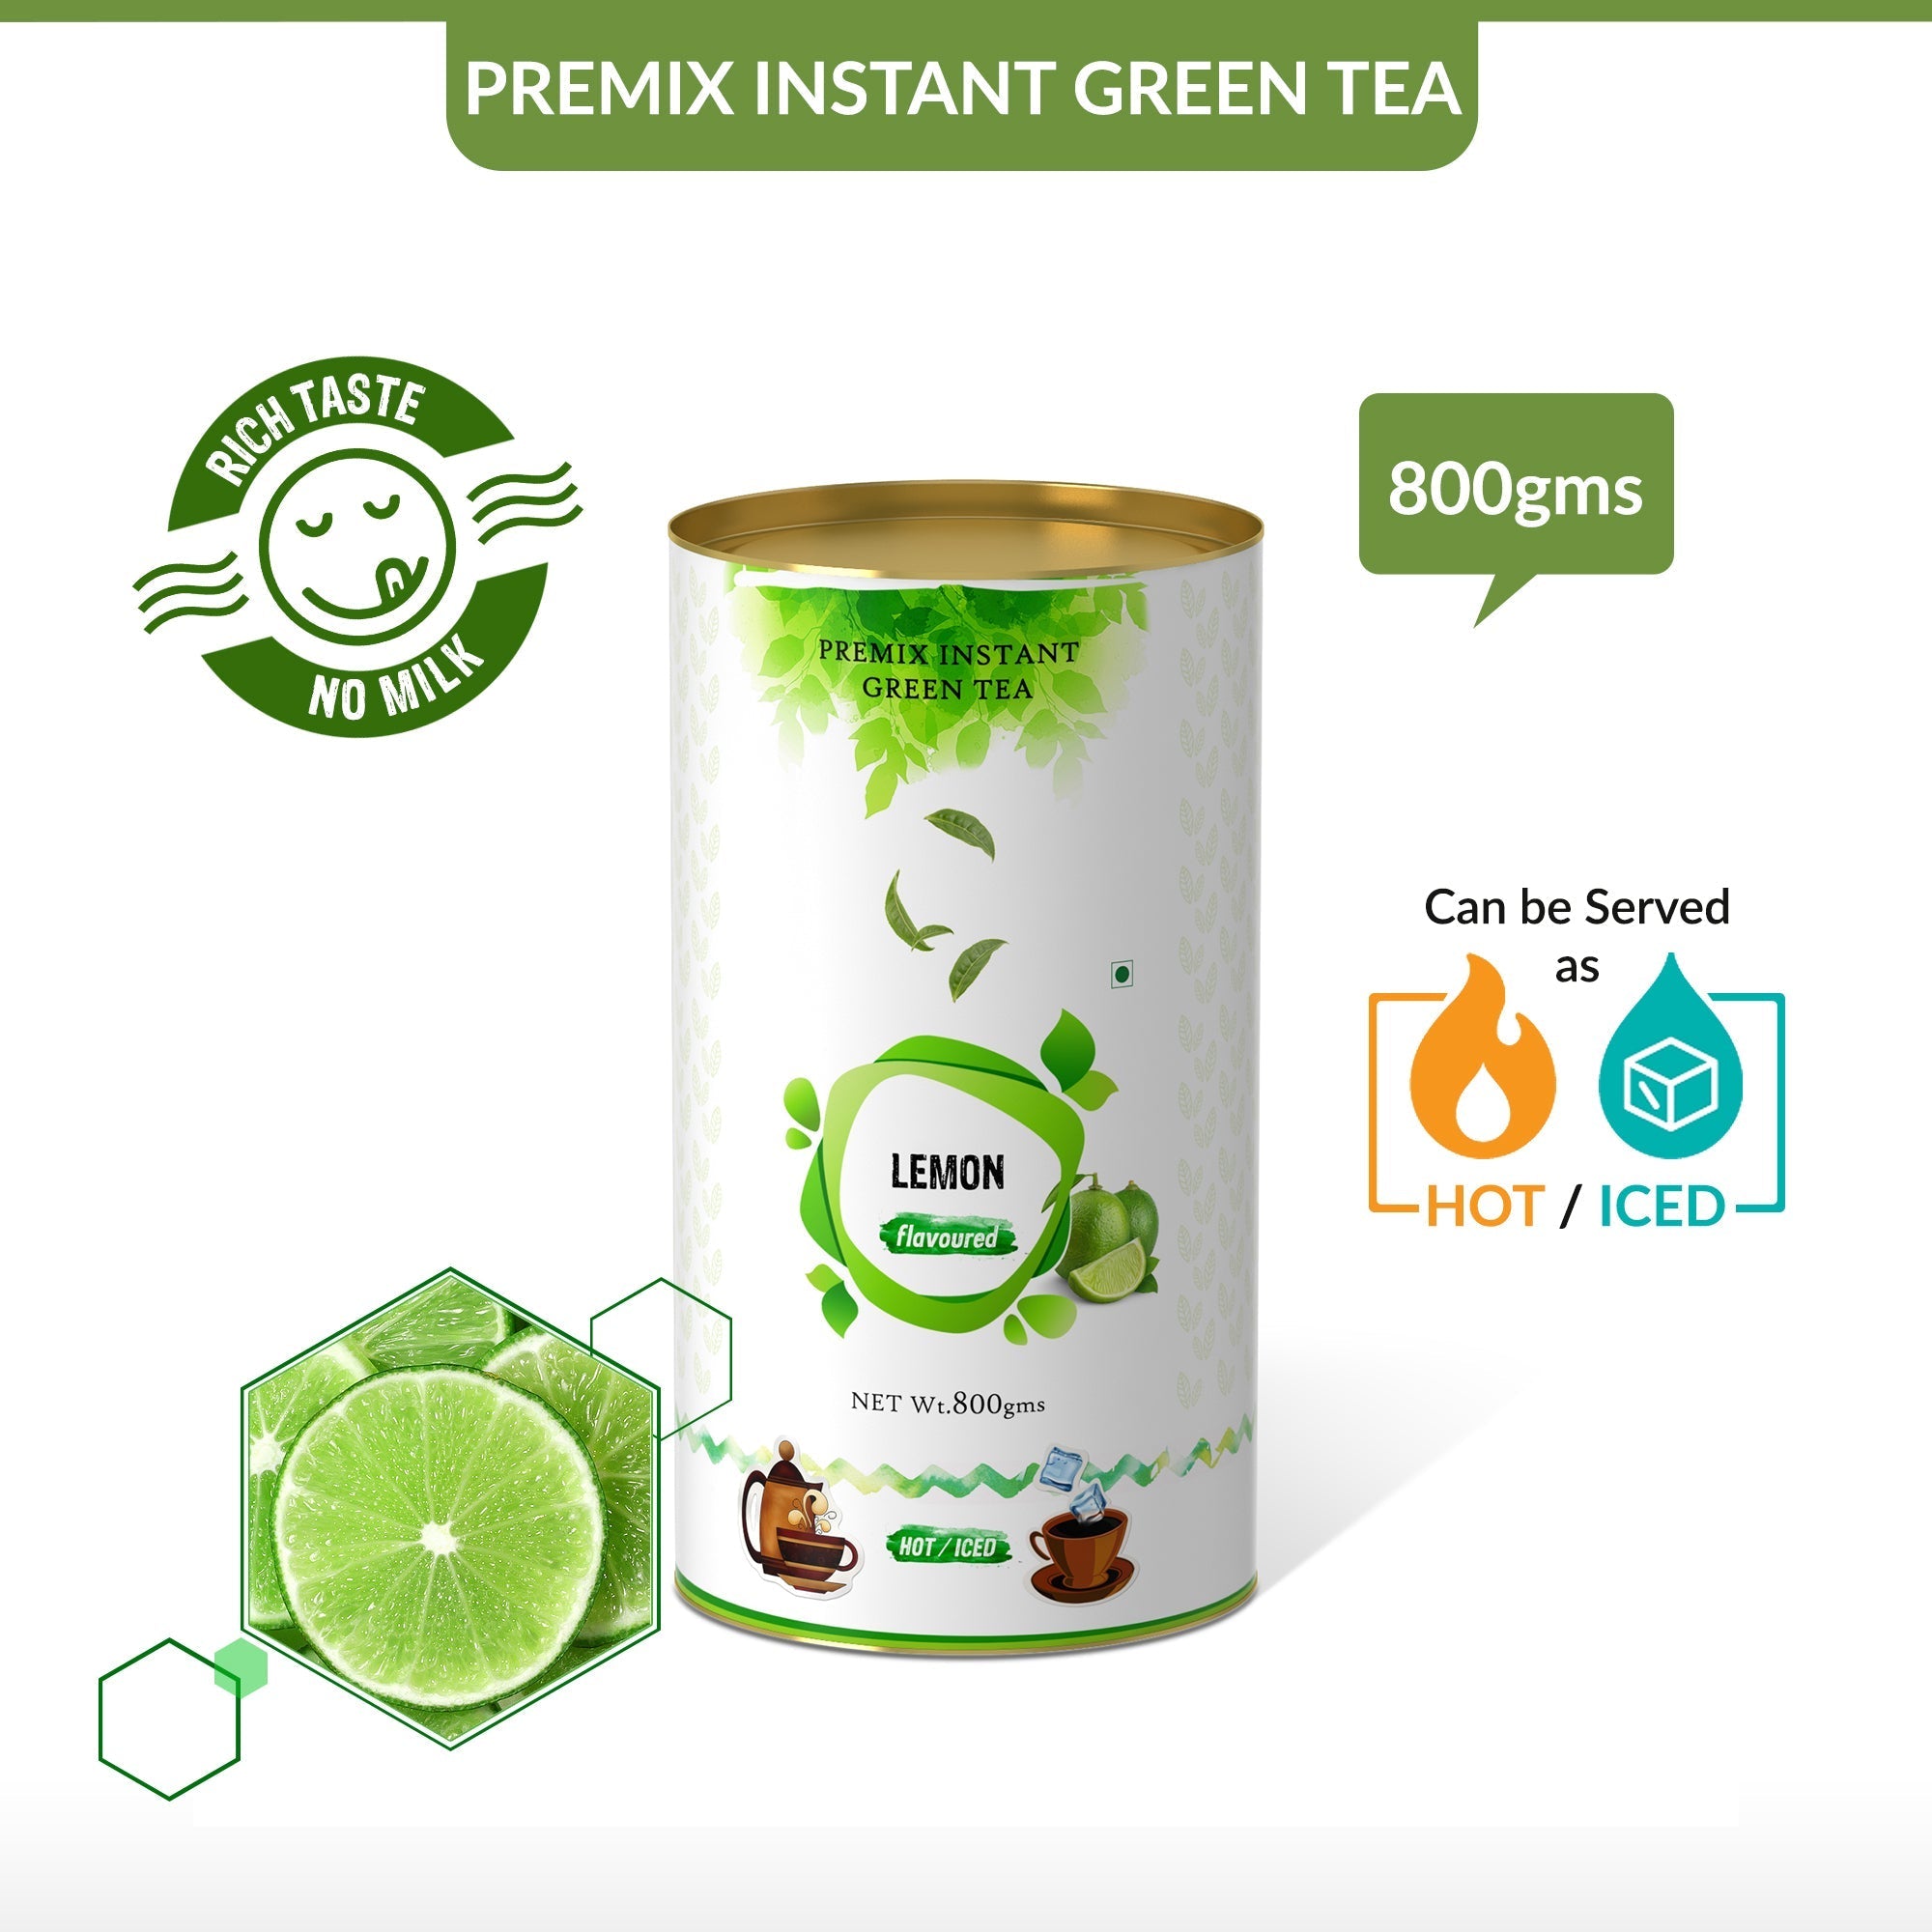 Lemon Flavored Instant Green Tea - 800 gms